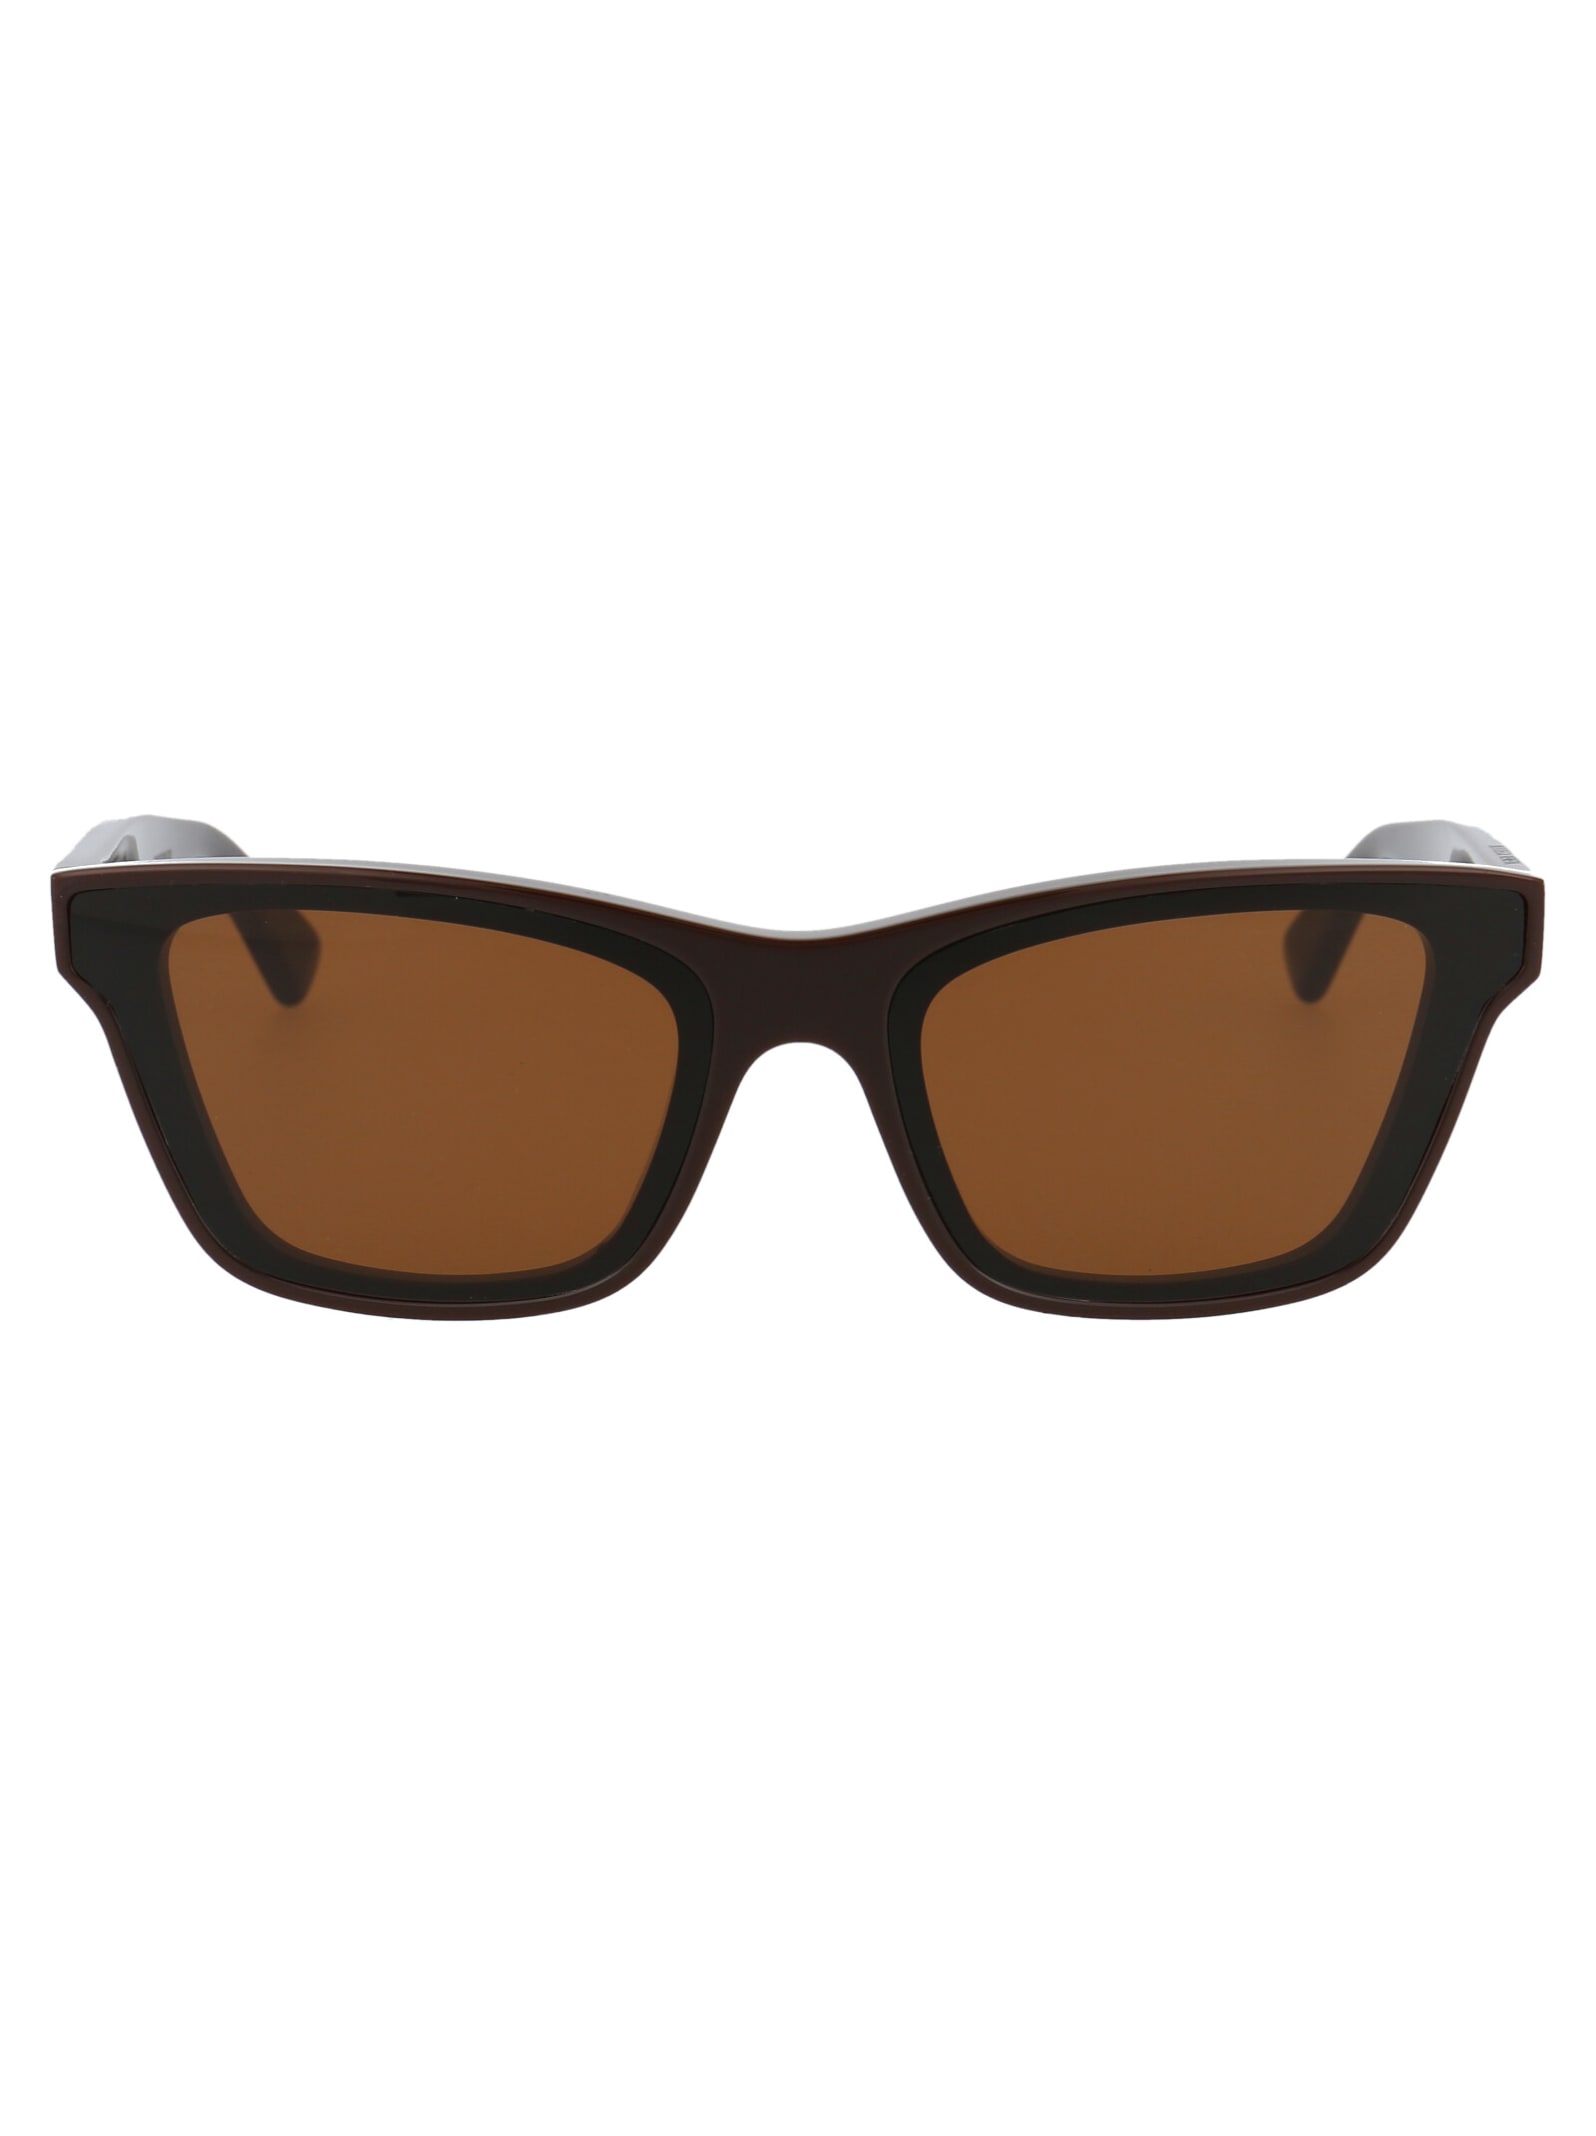 Bottega Veneta Bv1119s Sunglasses In 004 Brown Brown Brown